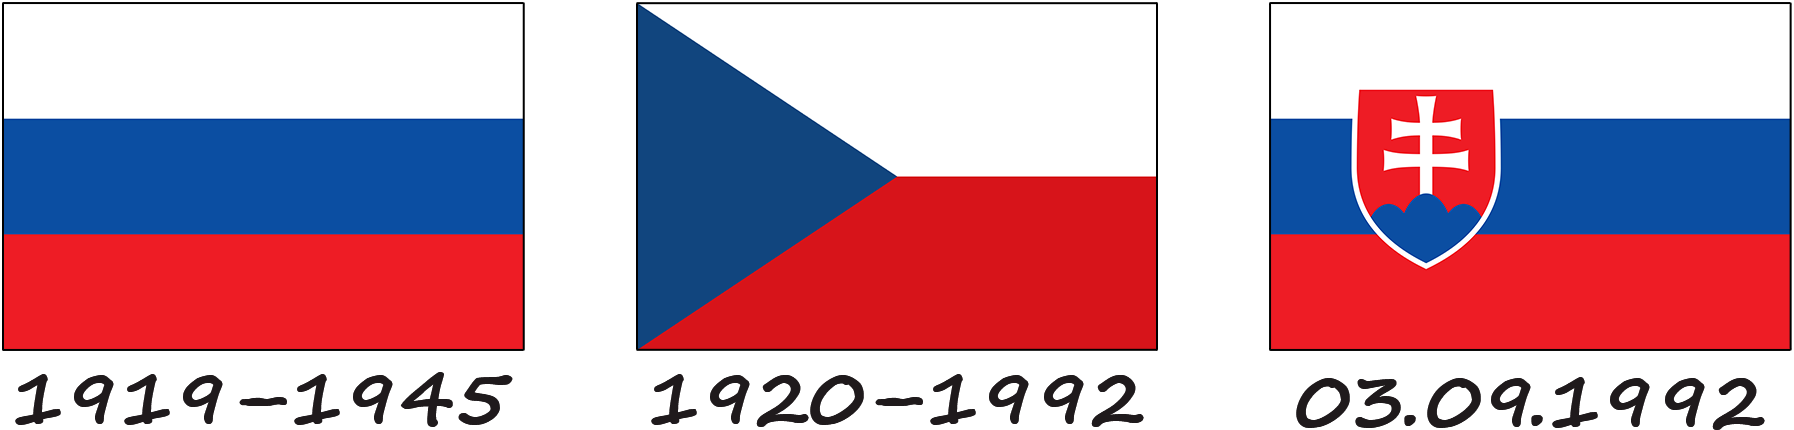 Historia de la bandera eslovaca